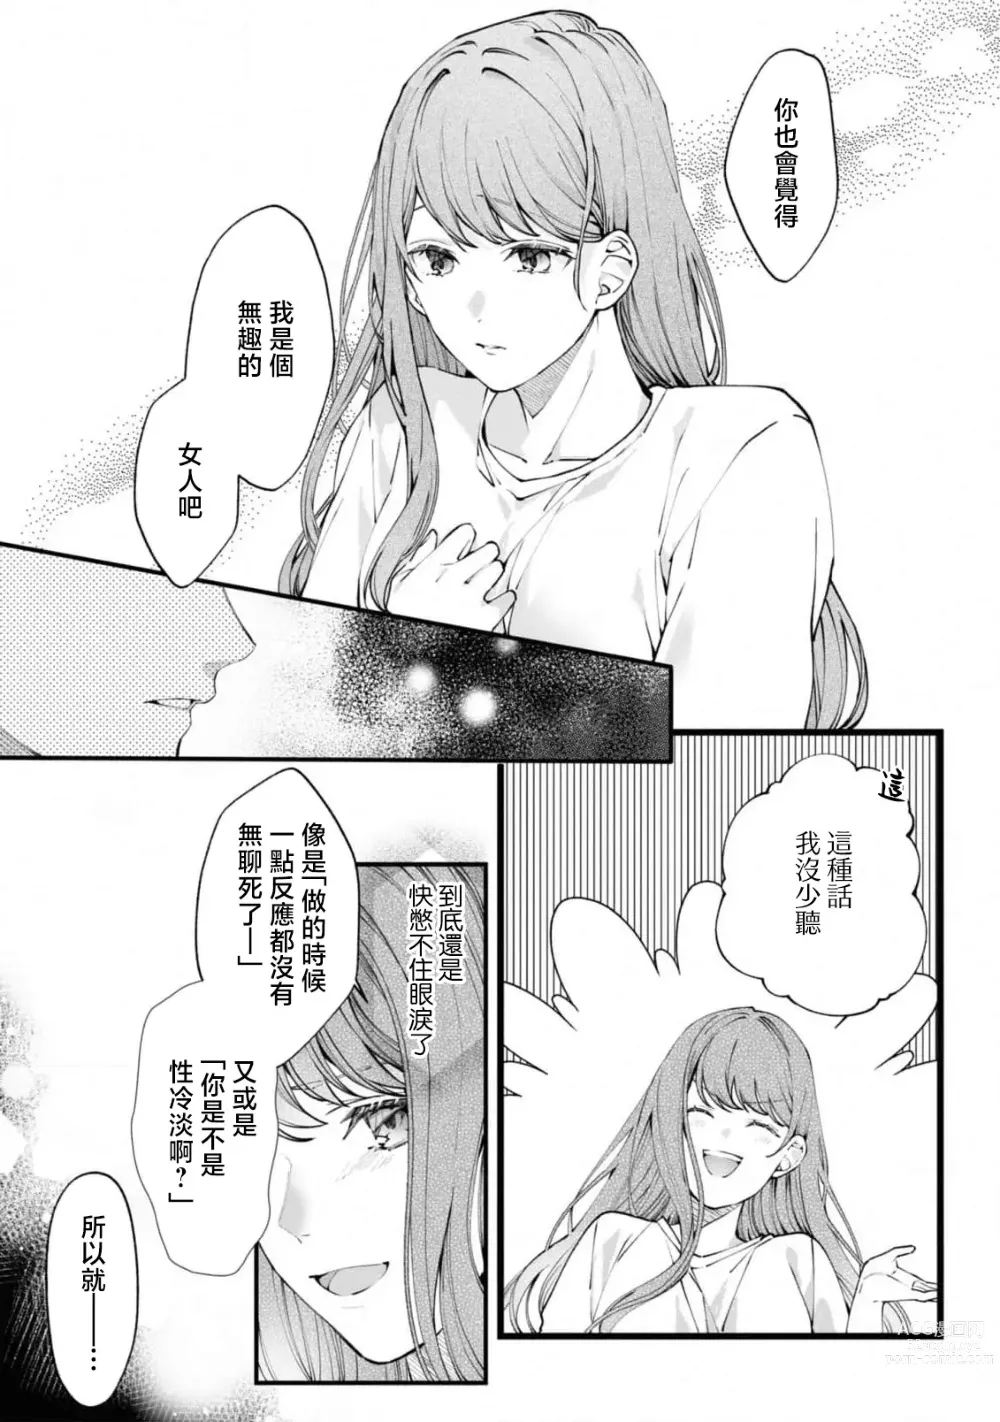 Page 8 of manga 「命运之恋近在咫尺～沉醉于好友的技巧之中～」